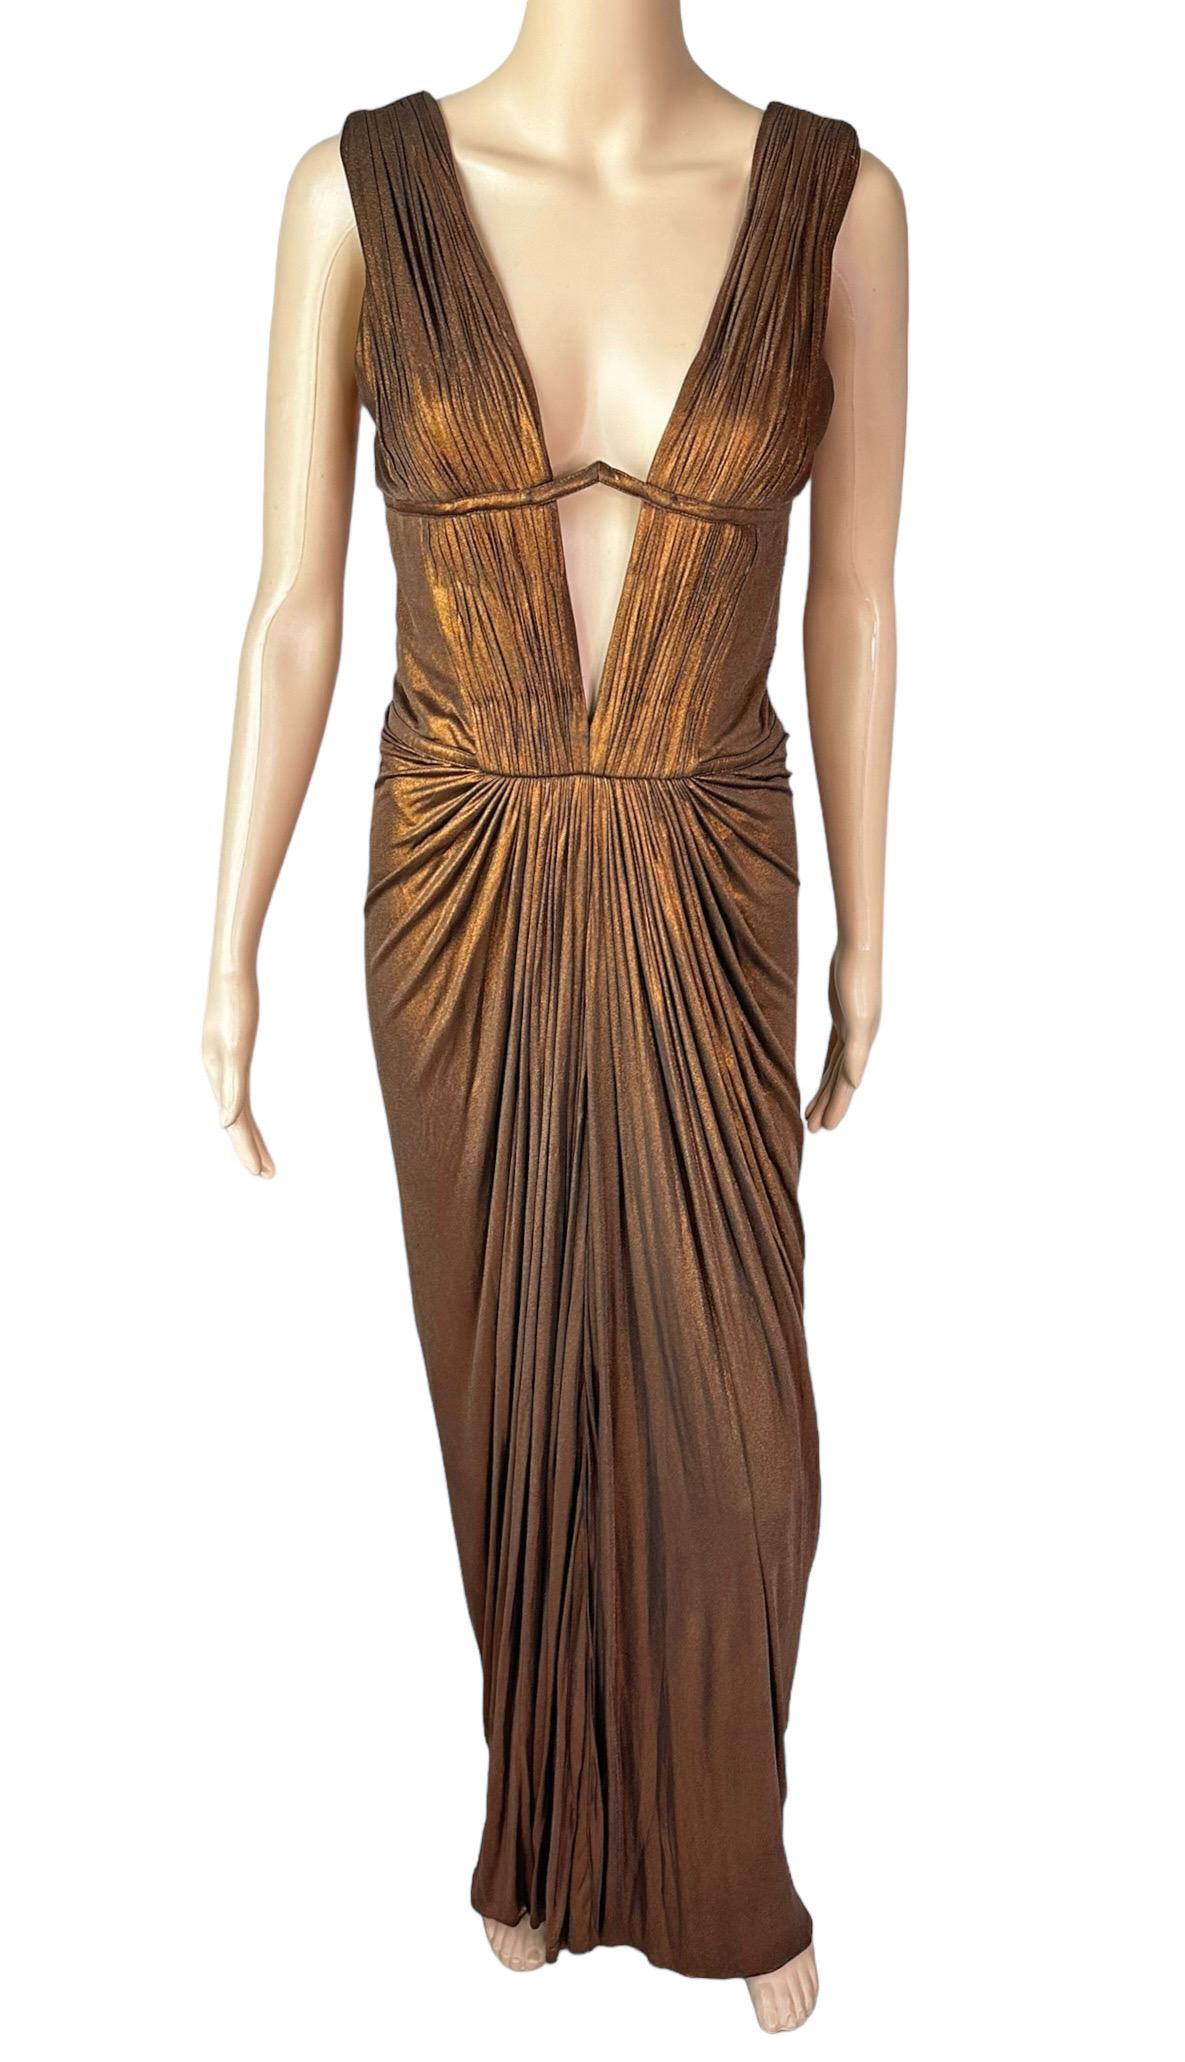 Roberto Cavalli F/W 2007 Metallic Plunging Neckline Open Back Evening Dress Gown For Sale 2